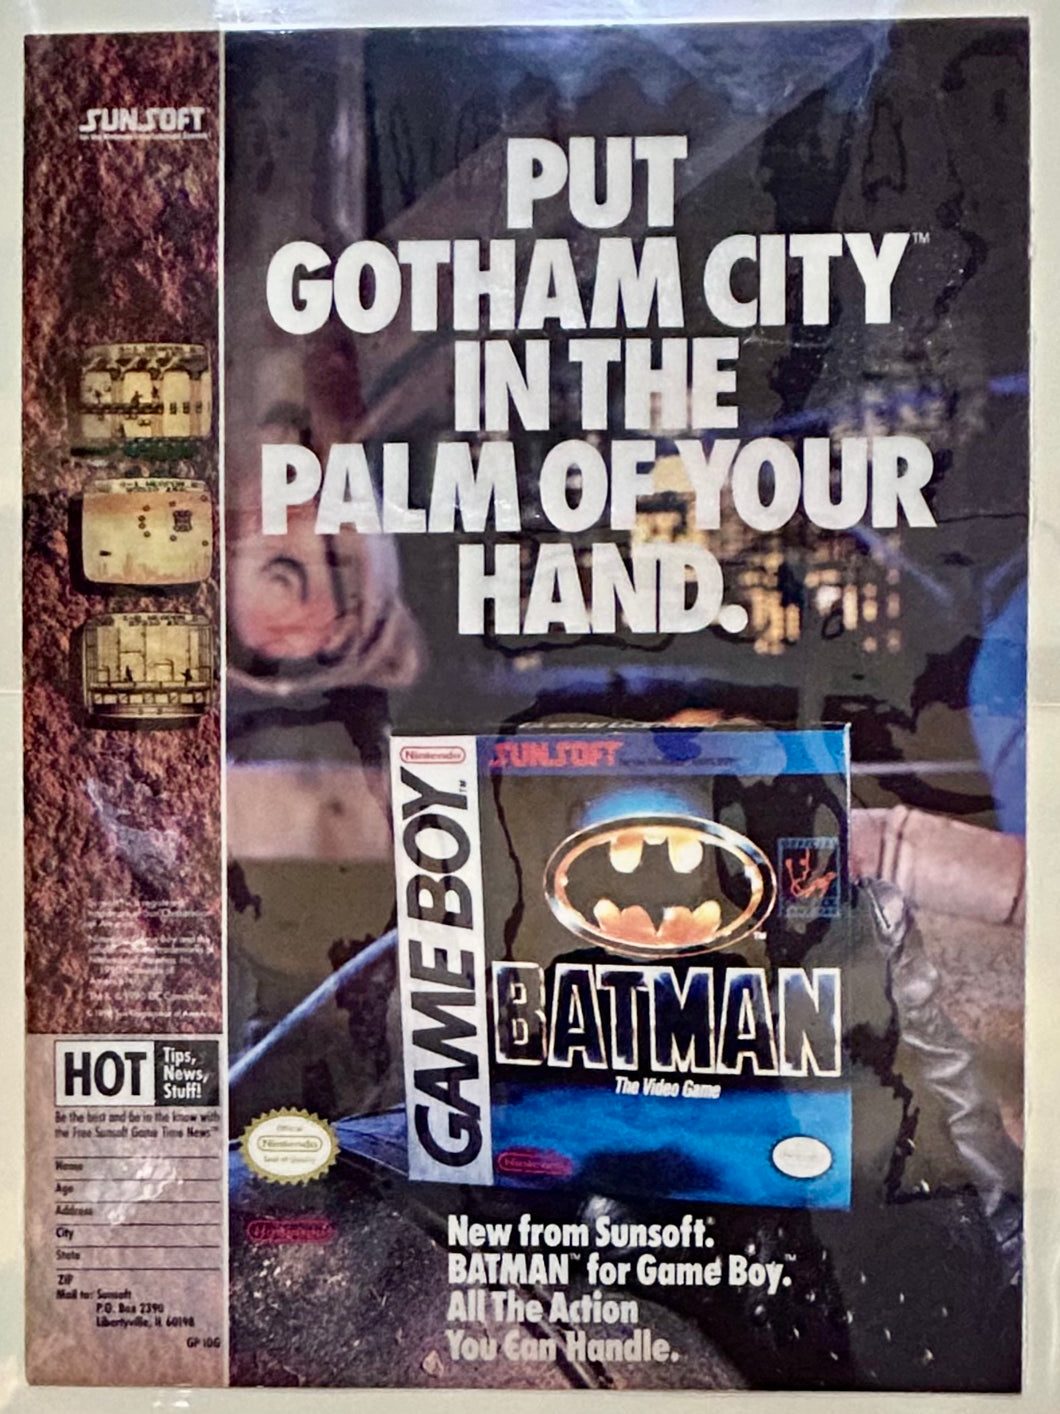 Batman: The Video Game - GameBoy - Original Vintage Advertisement - Print Ads - Laminated A4 Poster